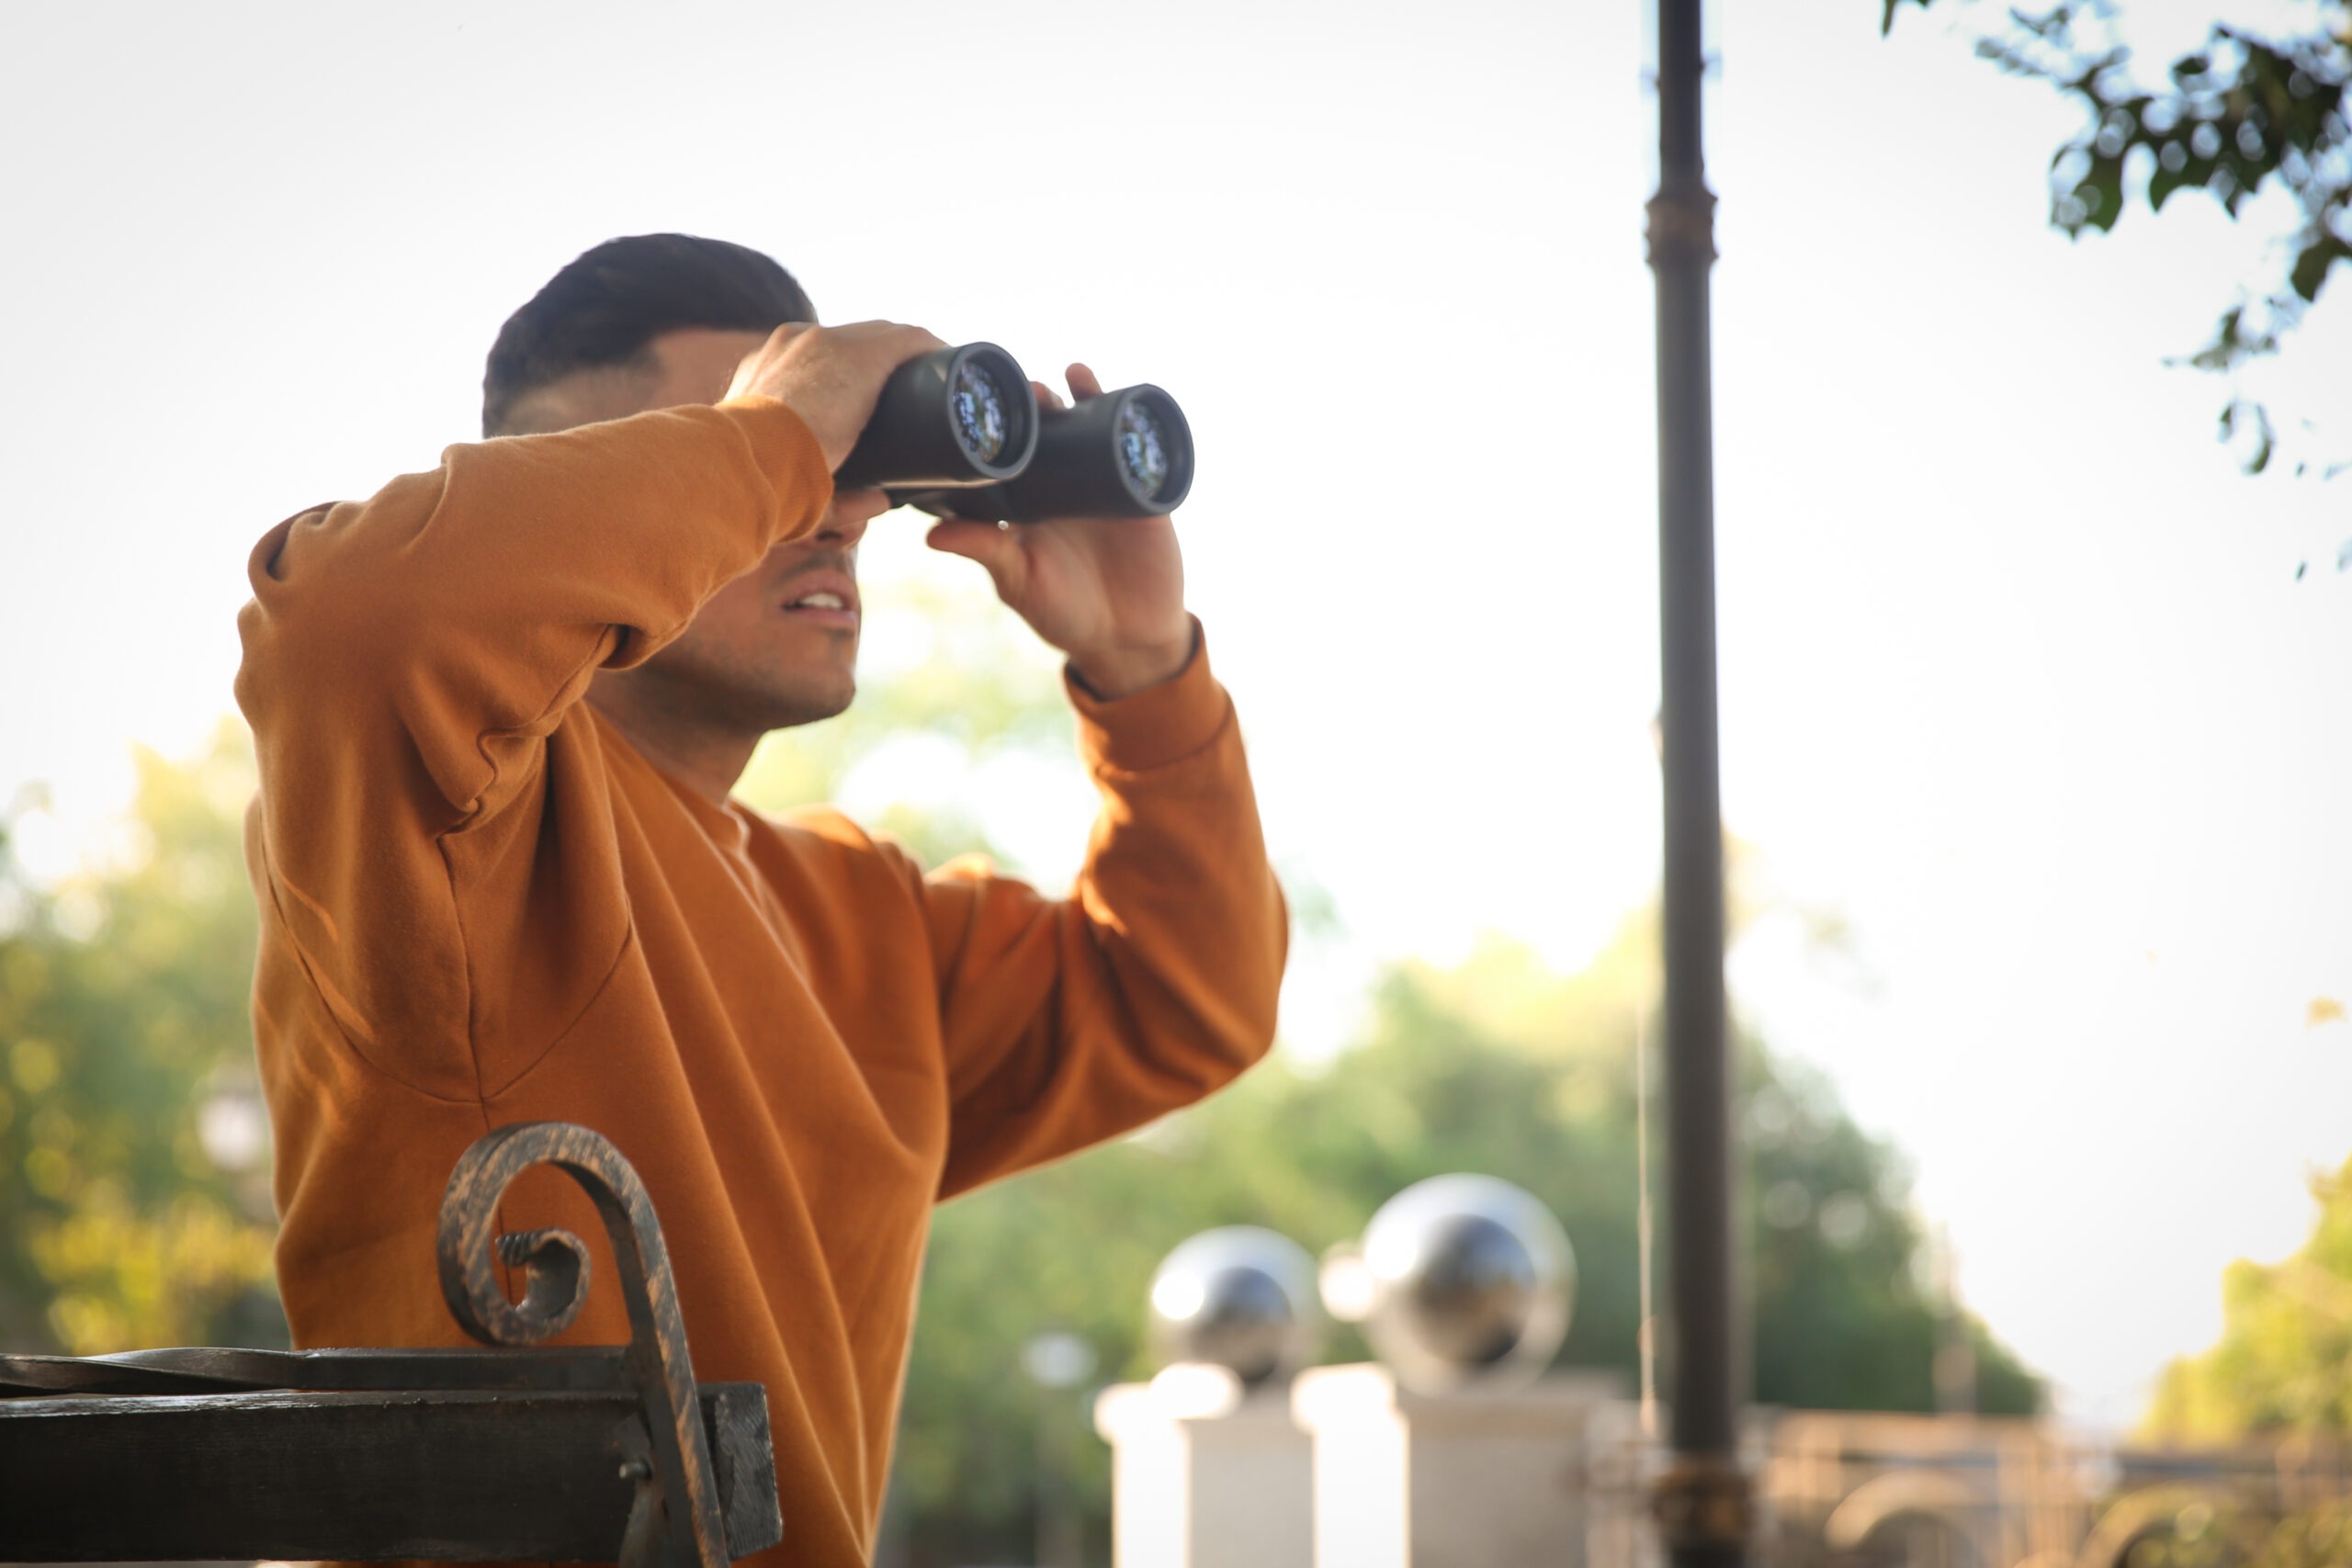 Man uses sneaky divorce tactics to spy on ex wife in park using a pair of binoculars